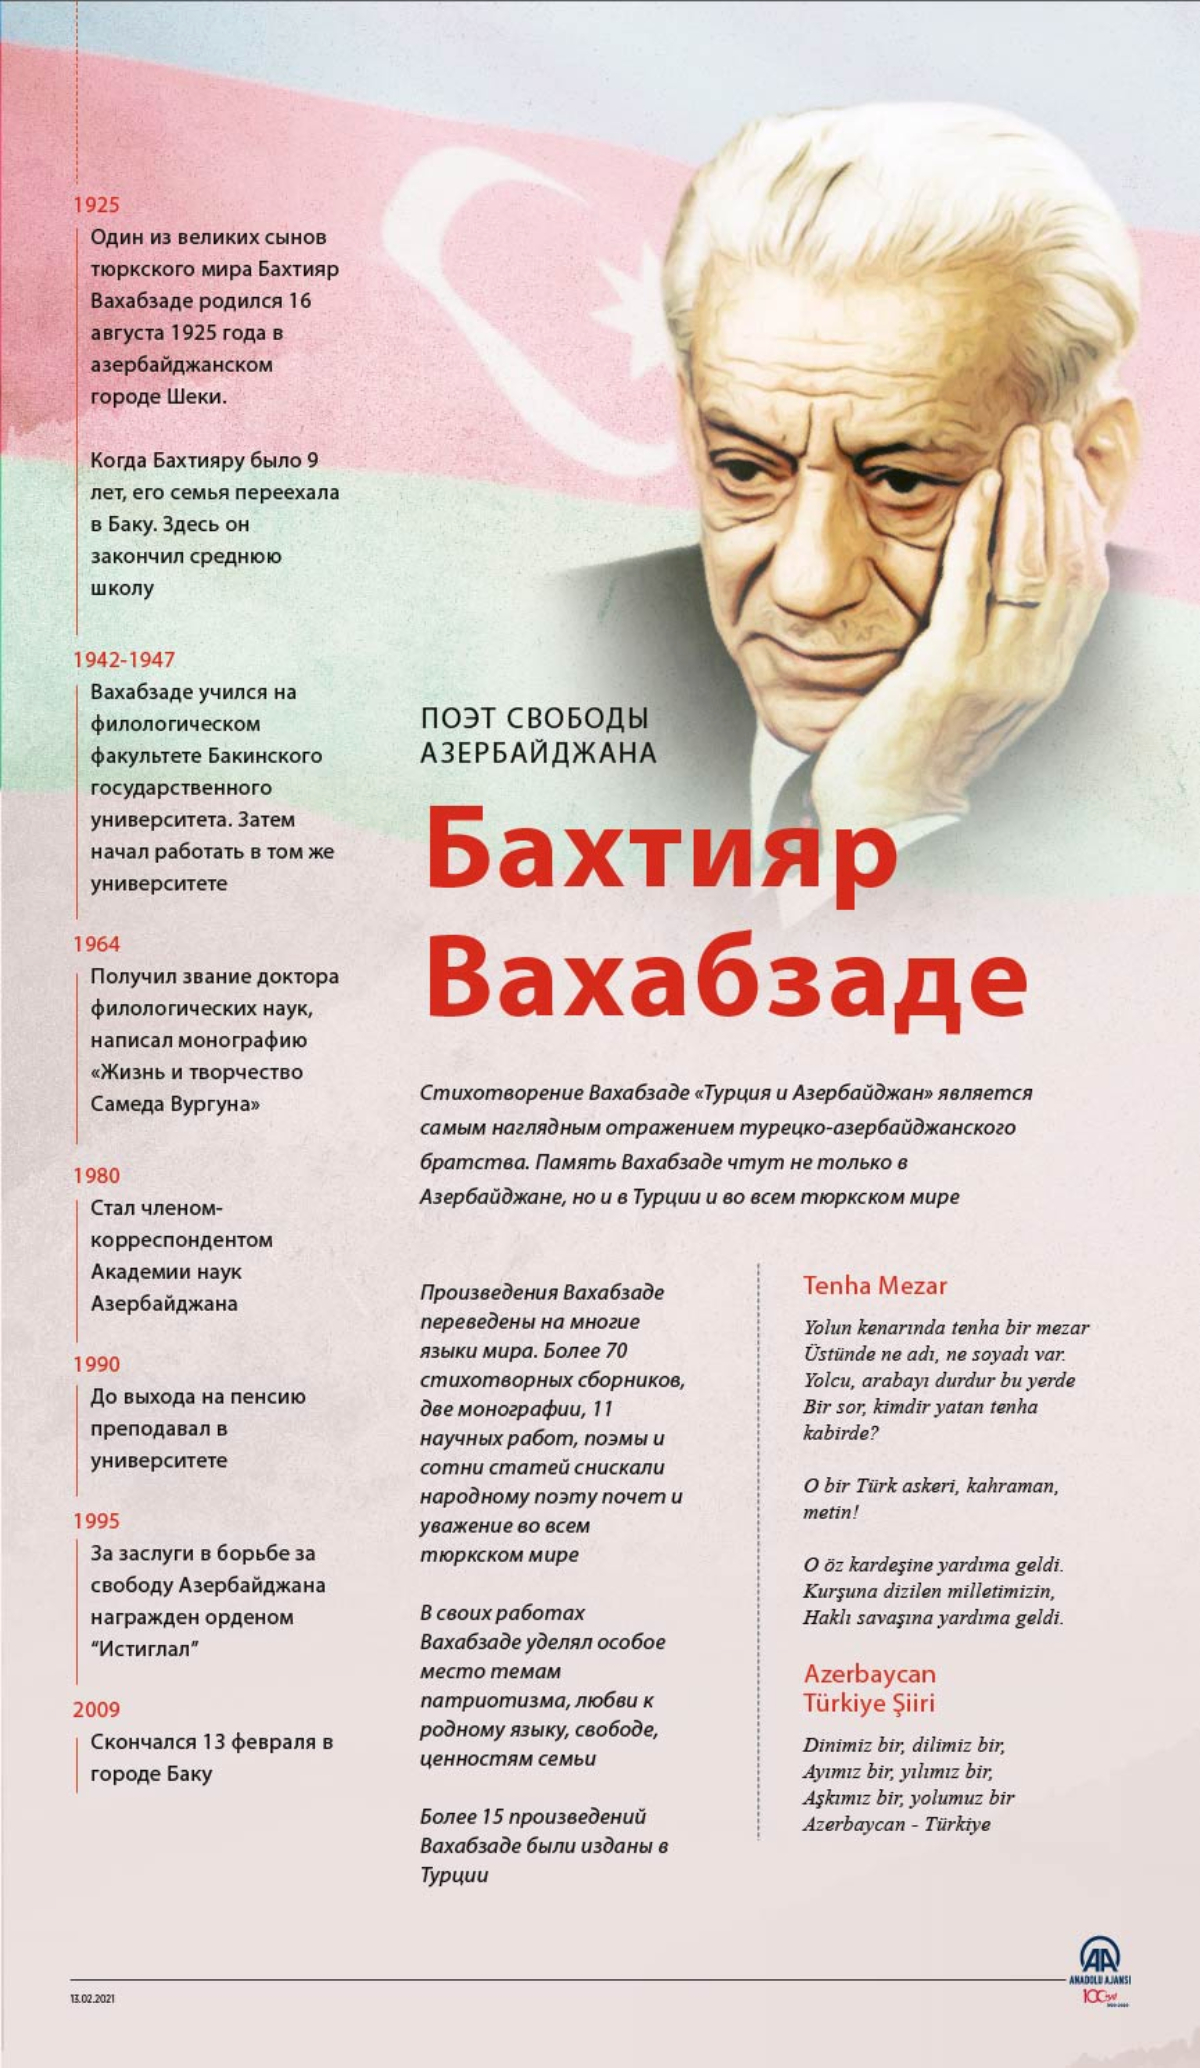 Бахтияр Вахабзаде - поэт свободы